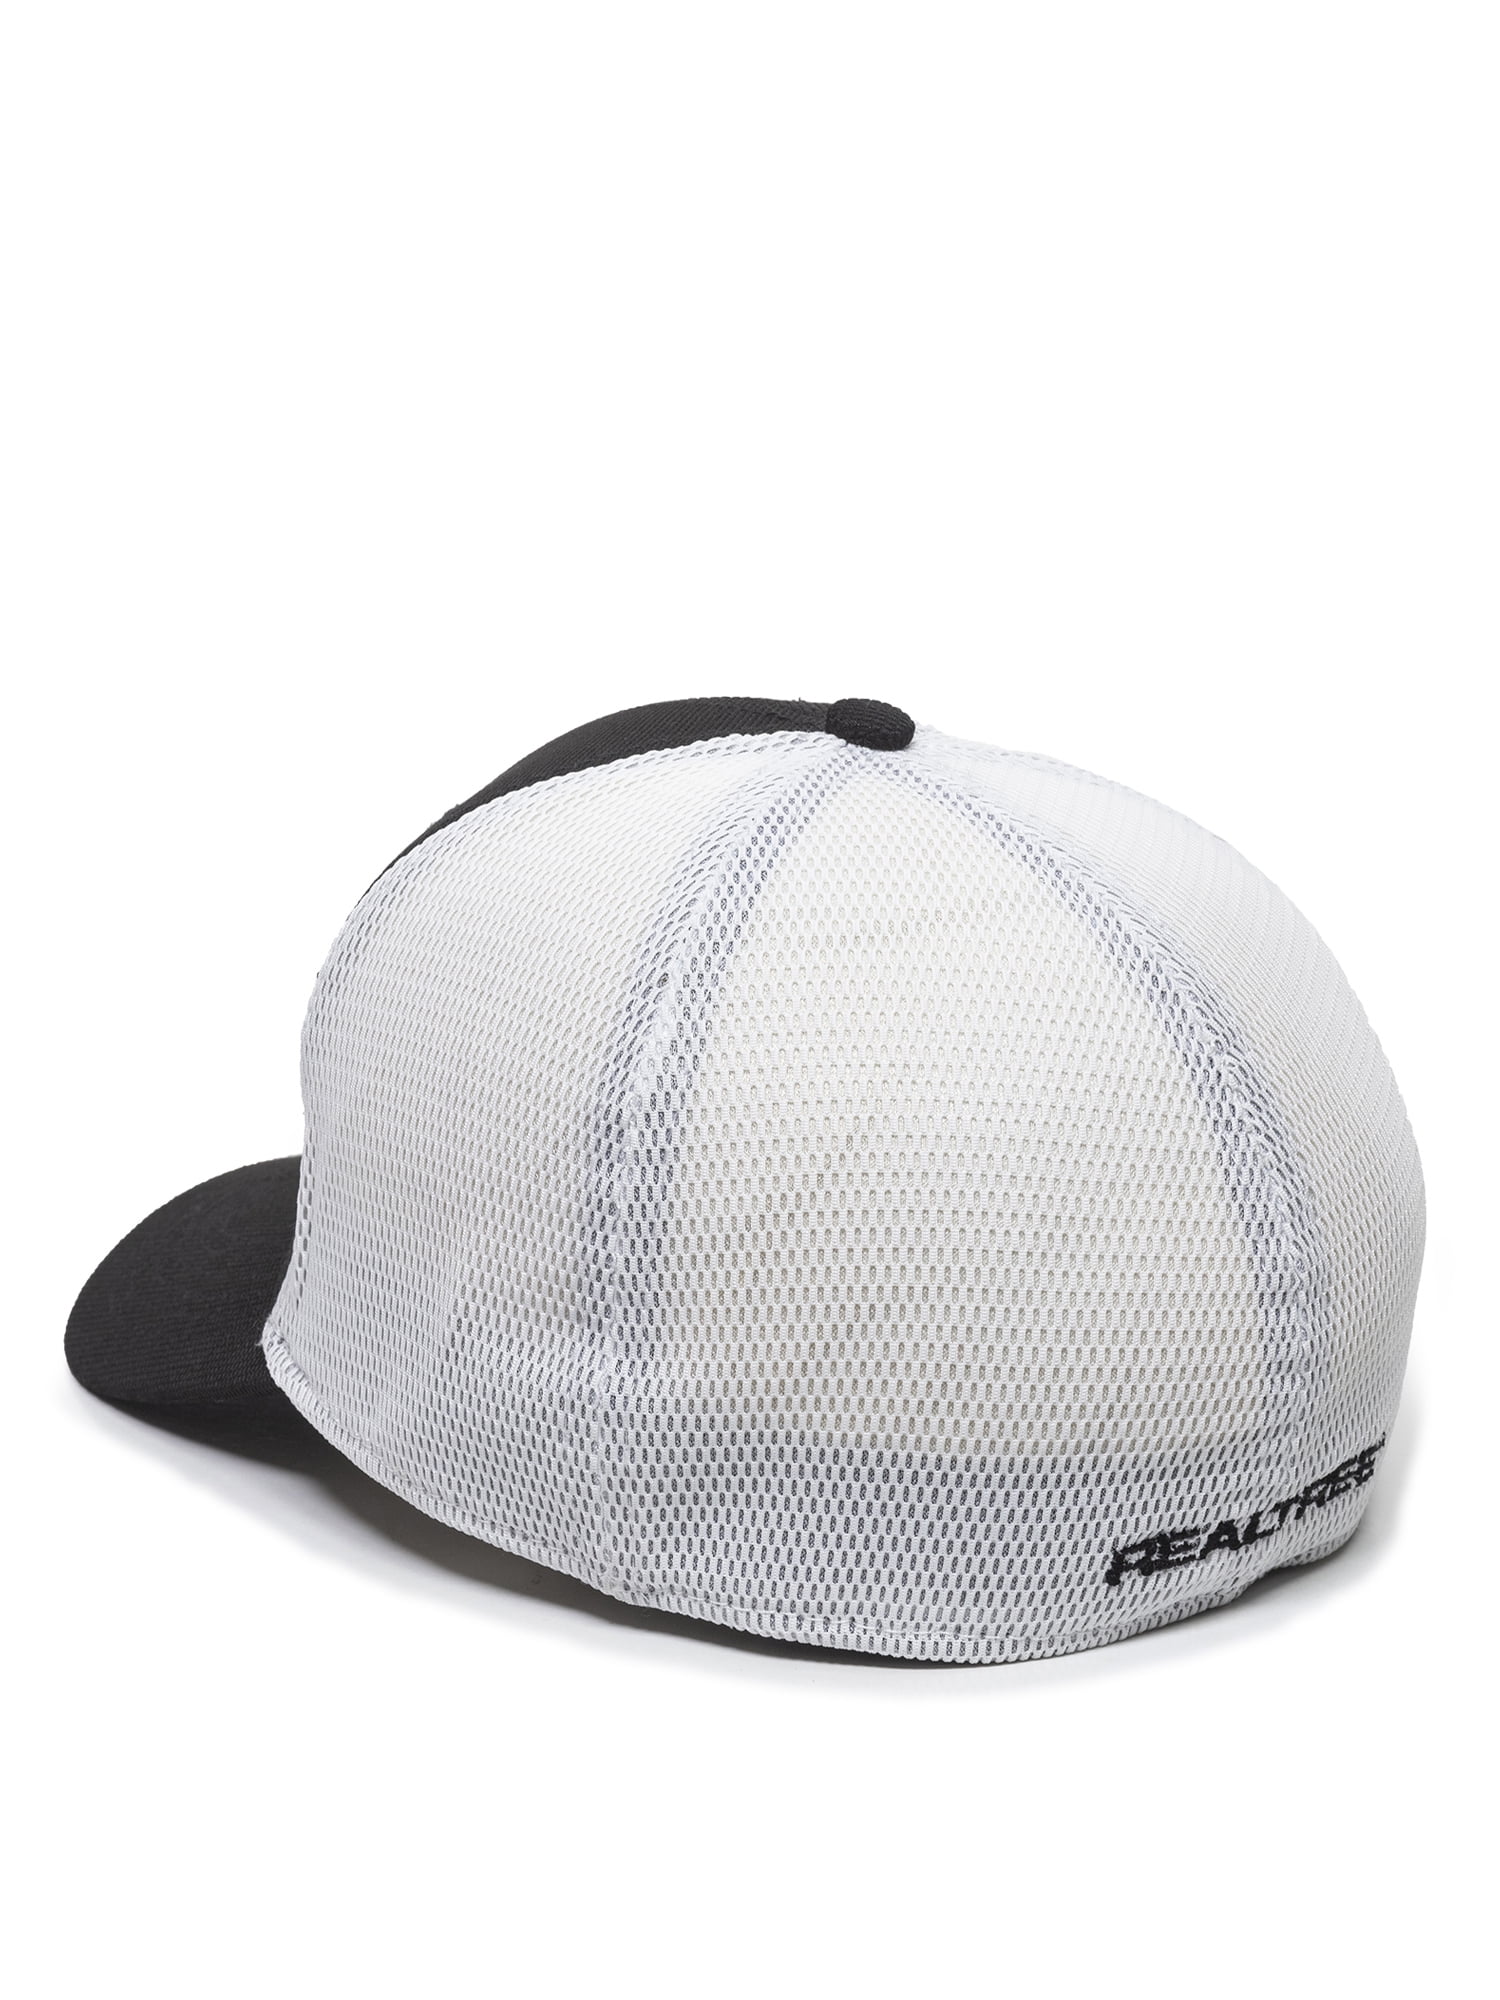 Structured Hat, Black/White, Realtree Large Hunting Large/Extra Style Baseball